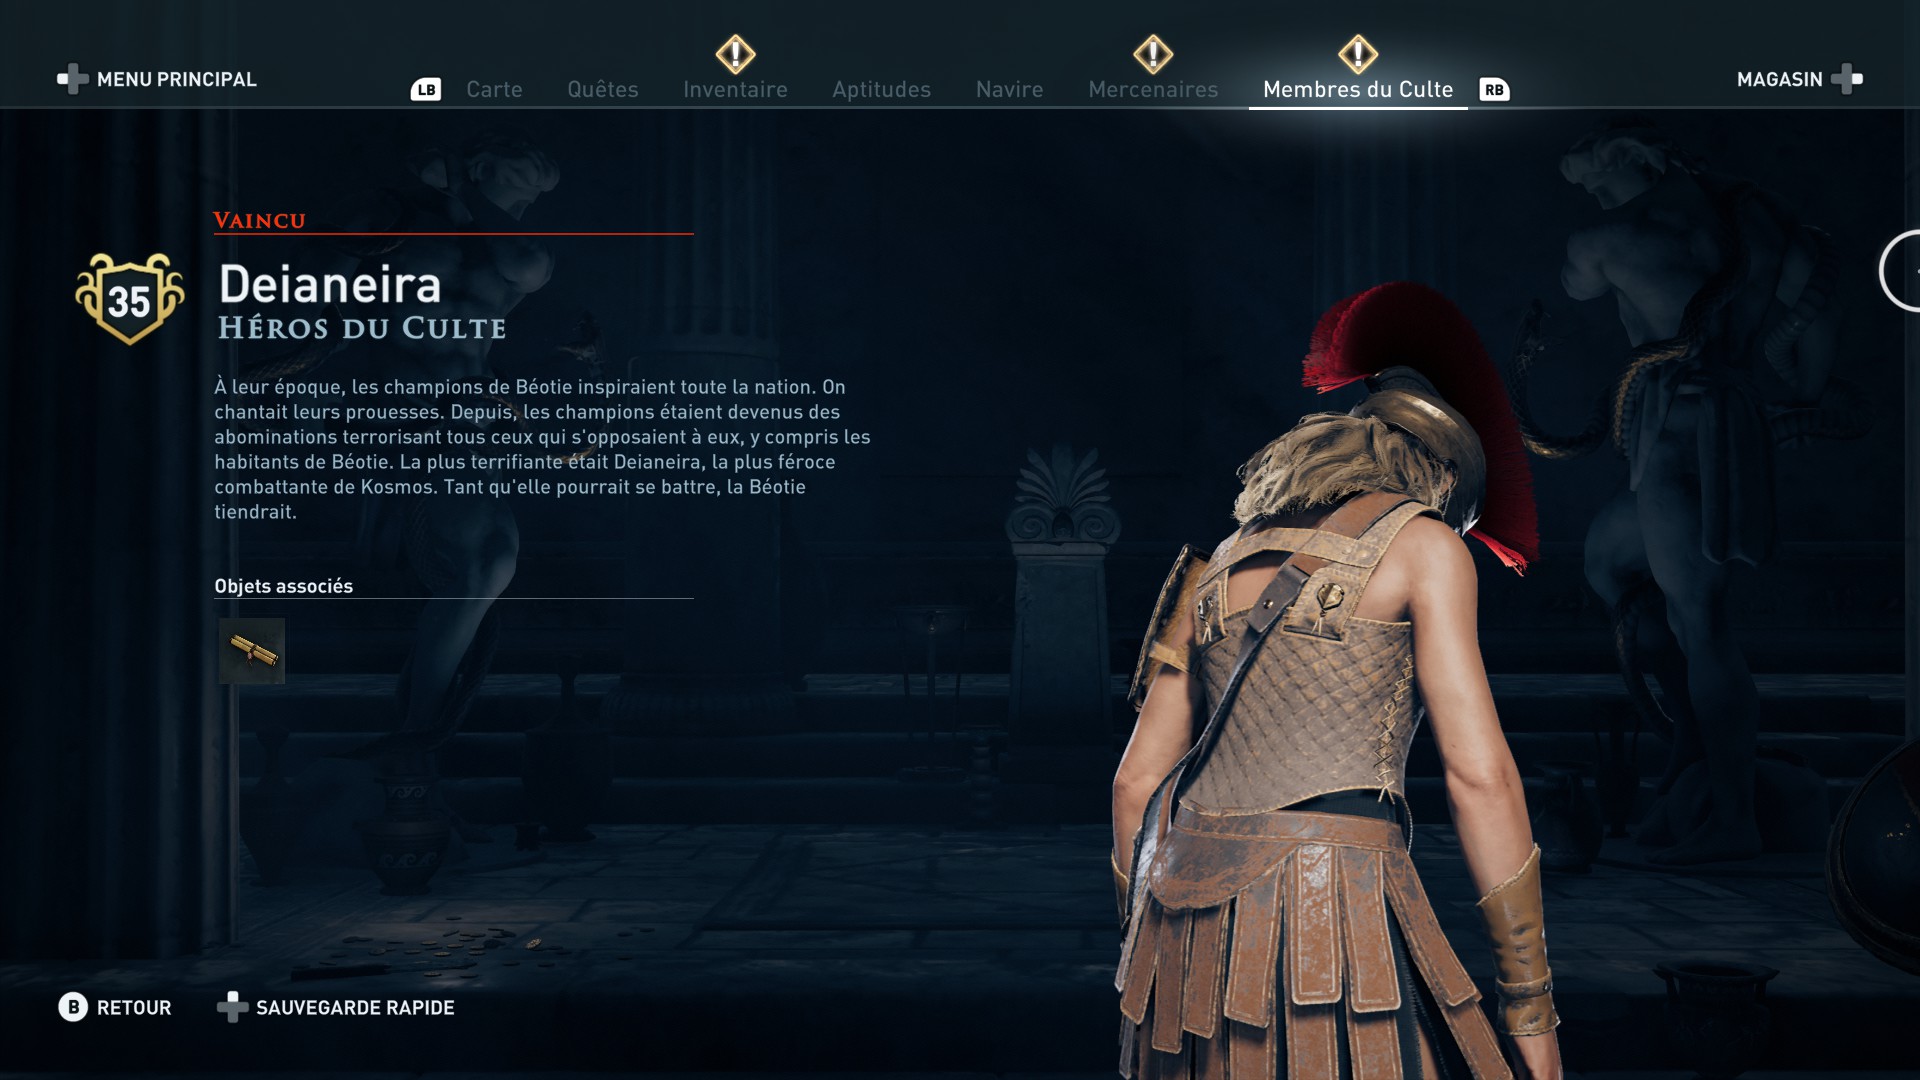 Assassin's Creed Odyssey trouver et tuer les adeptes du culte du Kosmos, ps4, xbox one, pc, ubisoft, jeu vidéo, Deianeira héros du culte